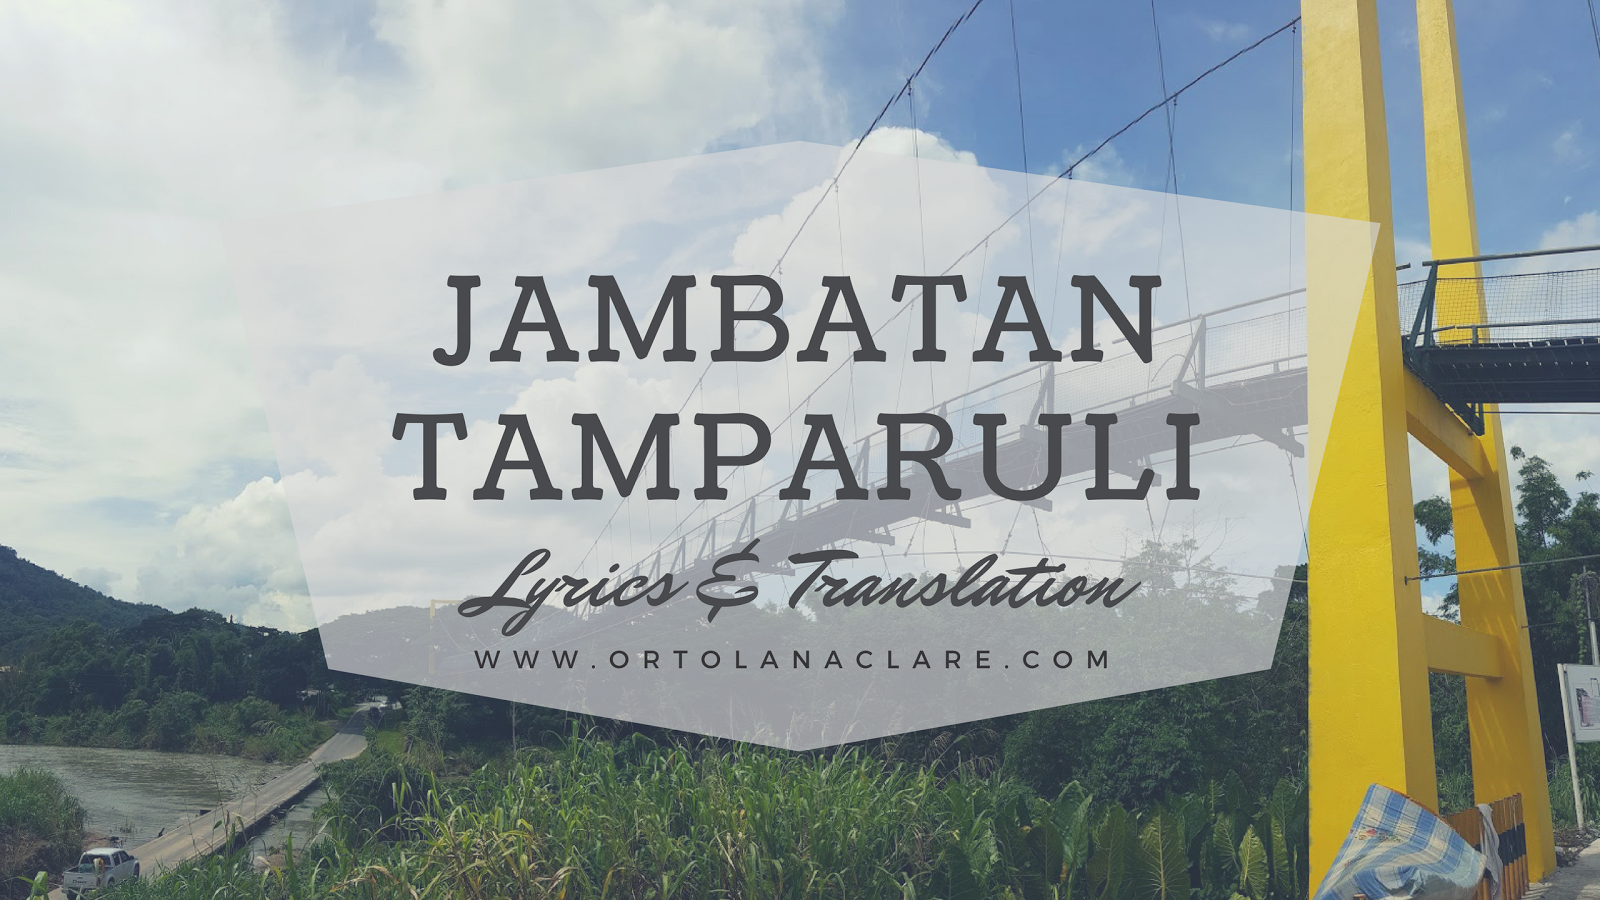 Ortolana Clare: Jambatan Tamparuli Song, Lyrics & Translation